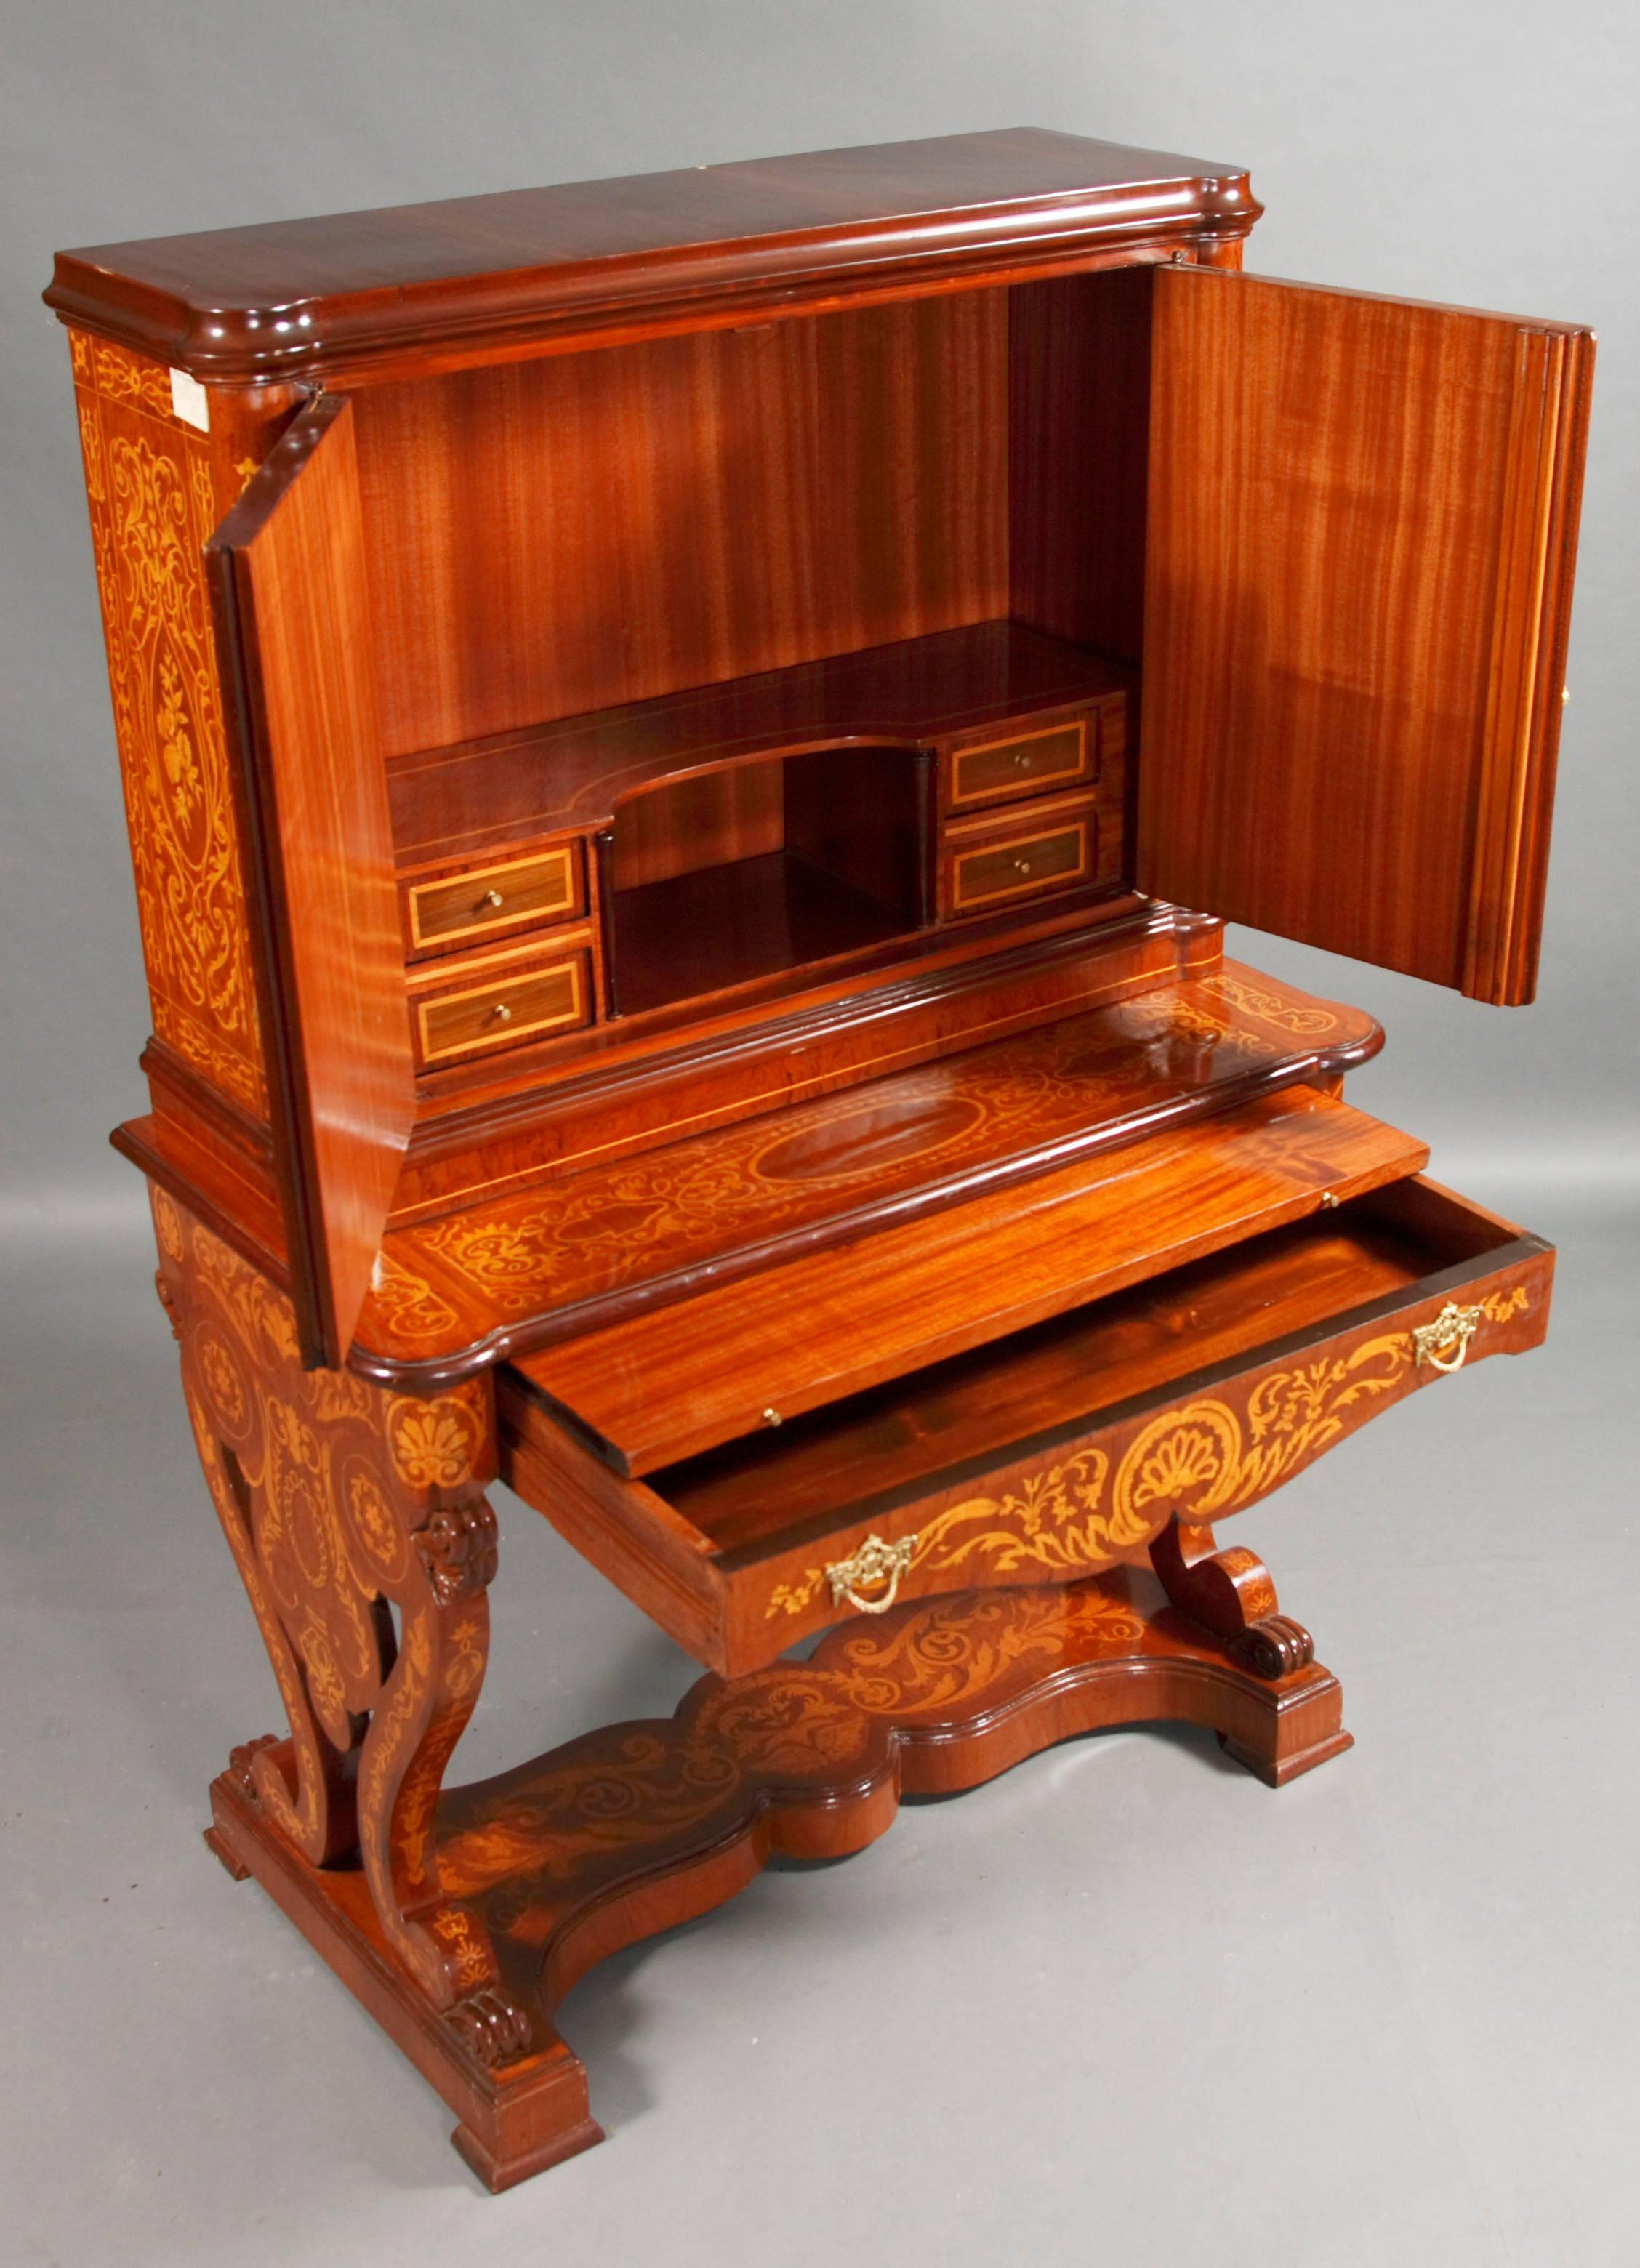 Wood 20th Century Writing Cabinet after the Italian Master Gio. B. Gatti